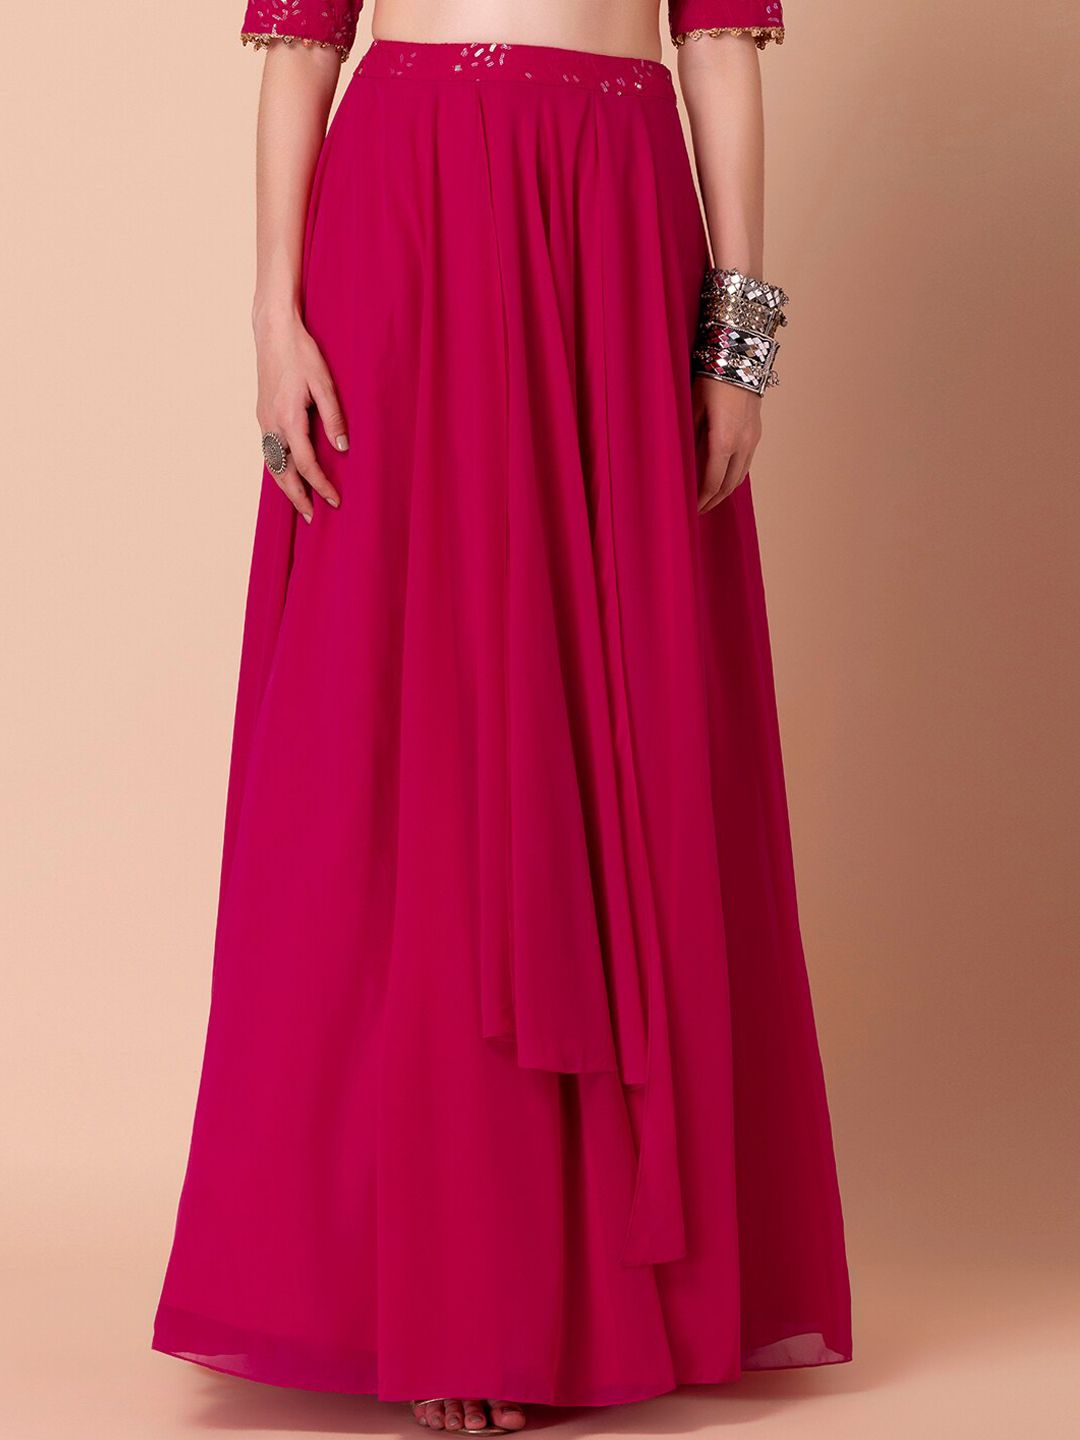 INDYA X Ridhi Mehra Women Pink Solid Maxi Lehenga Skirt Price in India